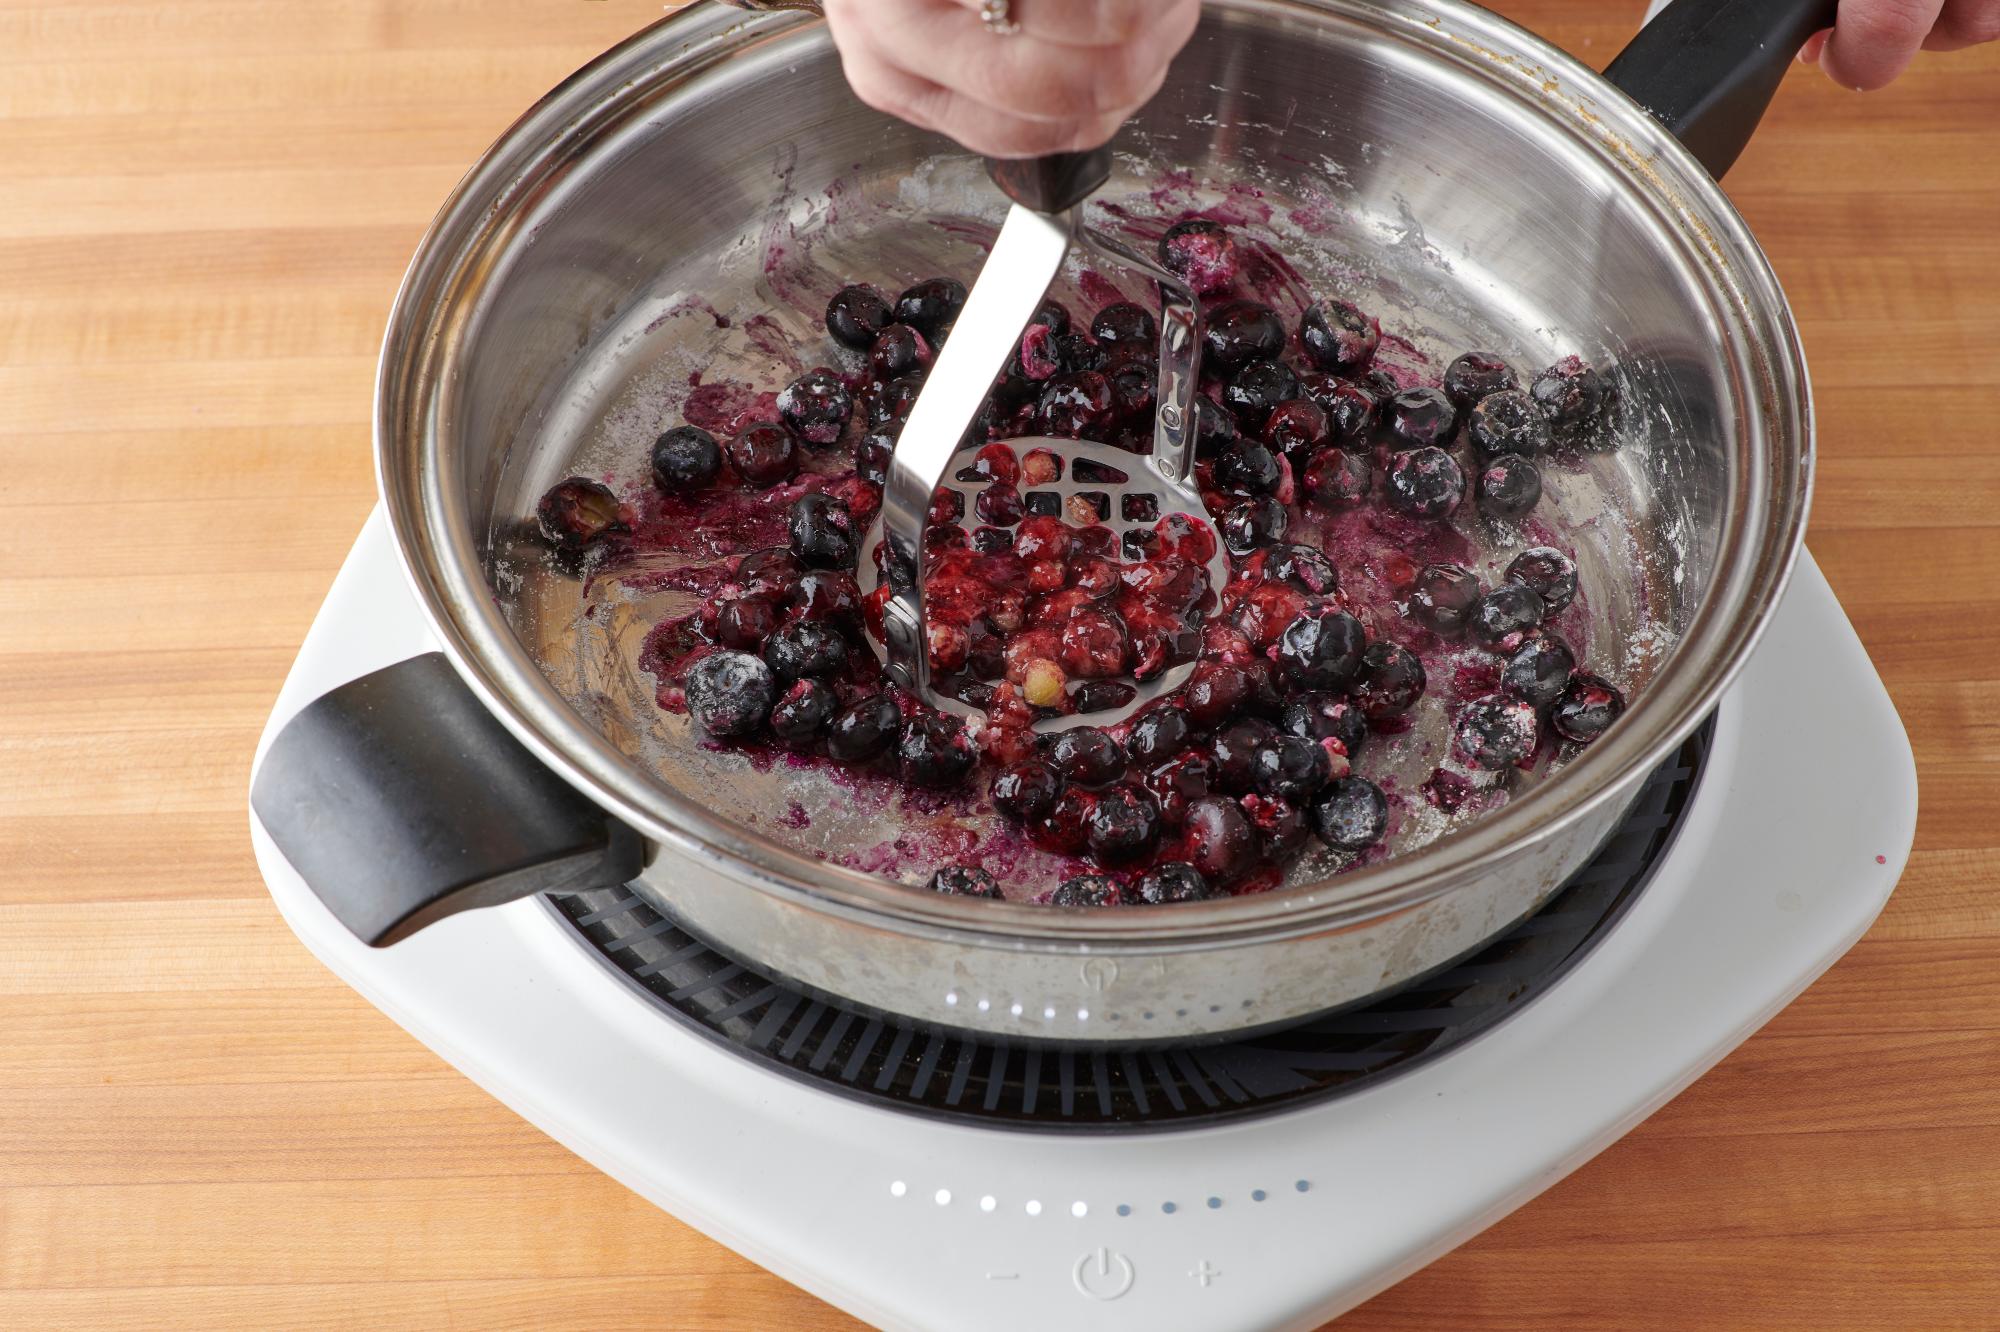 Use the Potato Masher to mash down the blueberries.